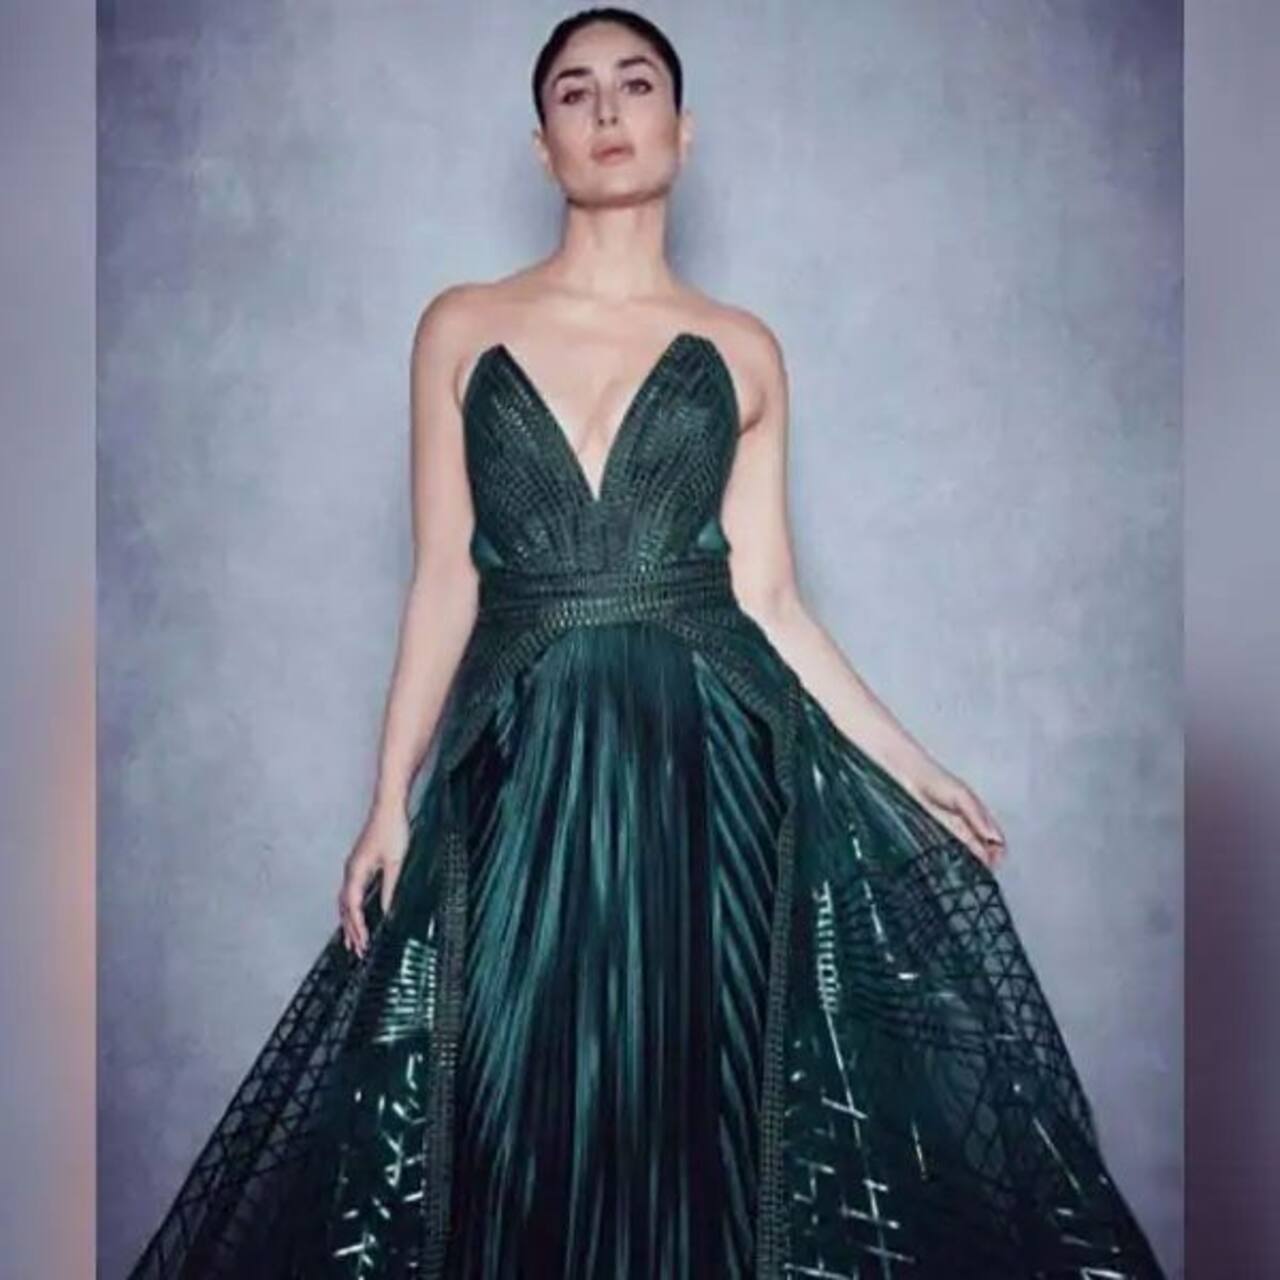 Lakme Fashion Week 2020 Kareena Kapoor Khan Grabs Eyeballs As The Showstopper In This Gorgeous